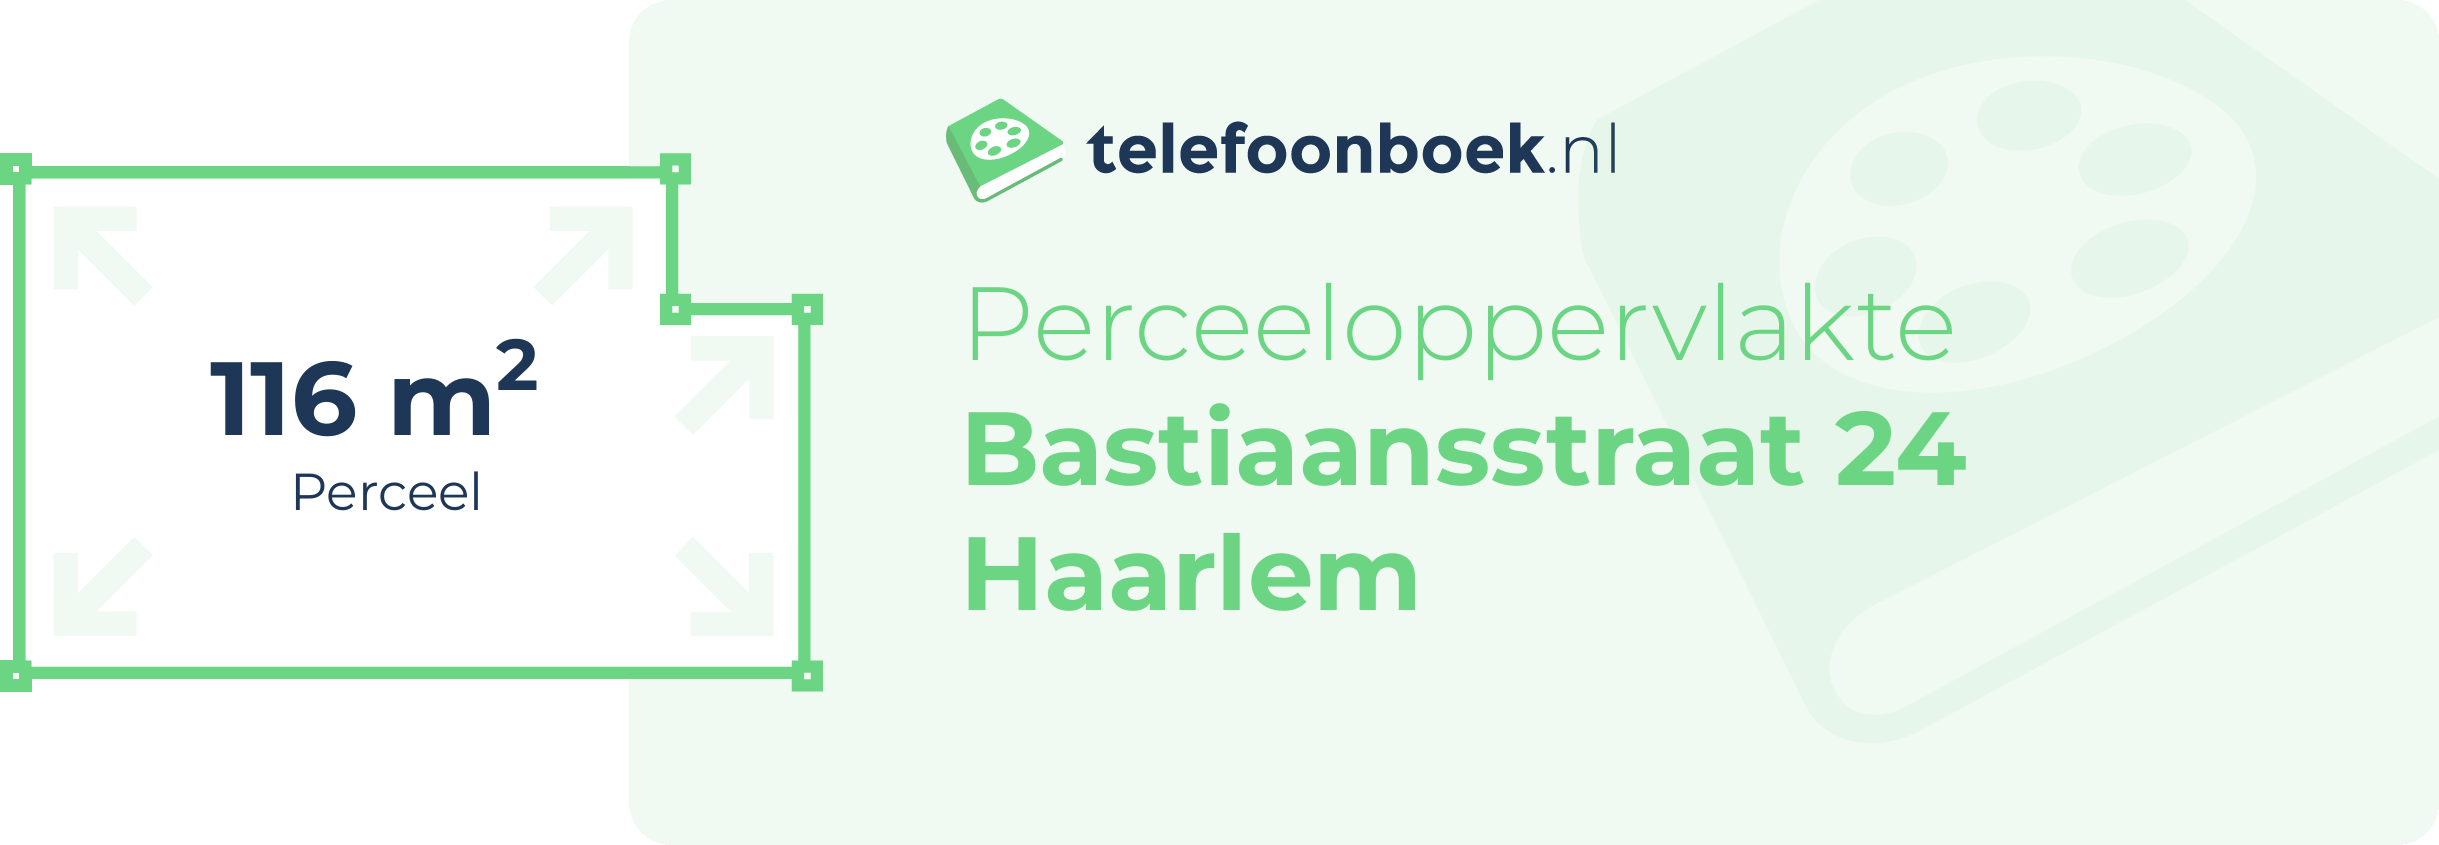 Perceeloppervlakte Bastiaansstraat 24 Haarlem